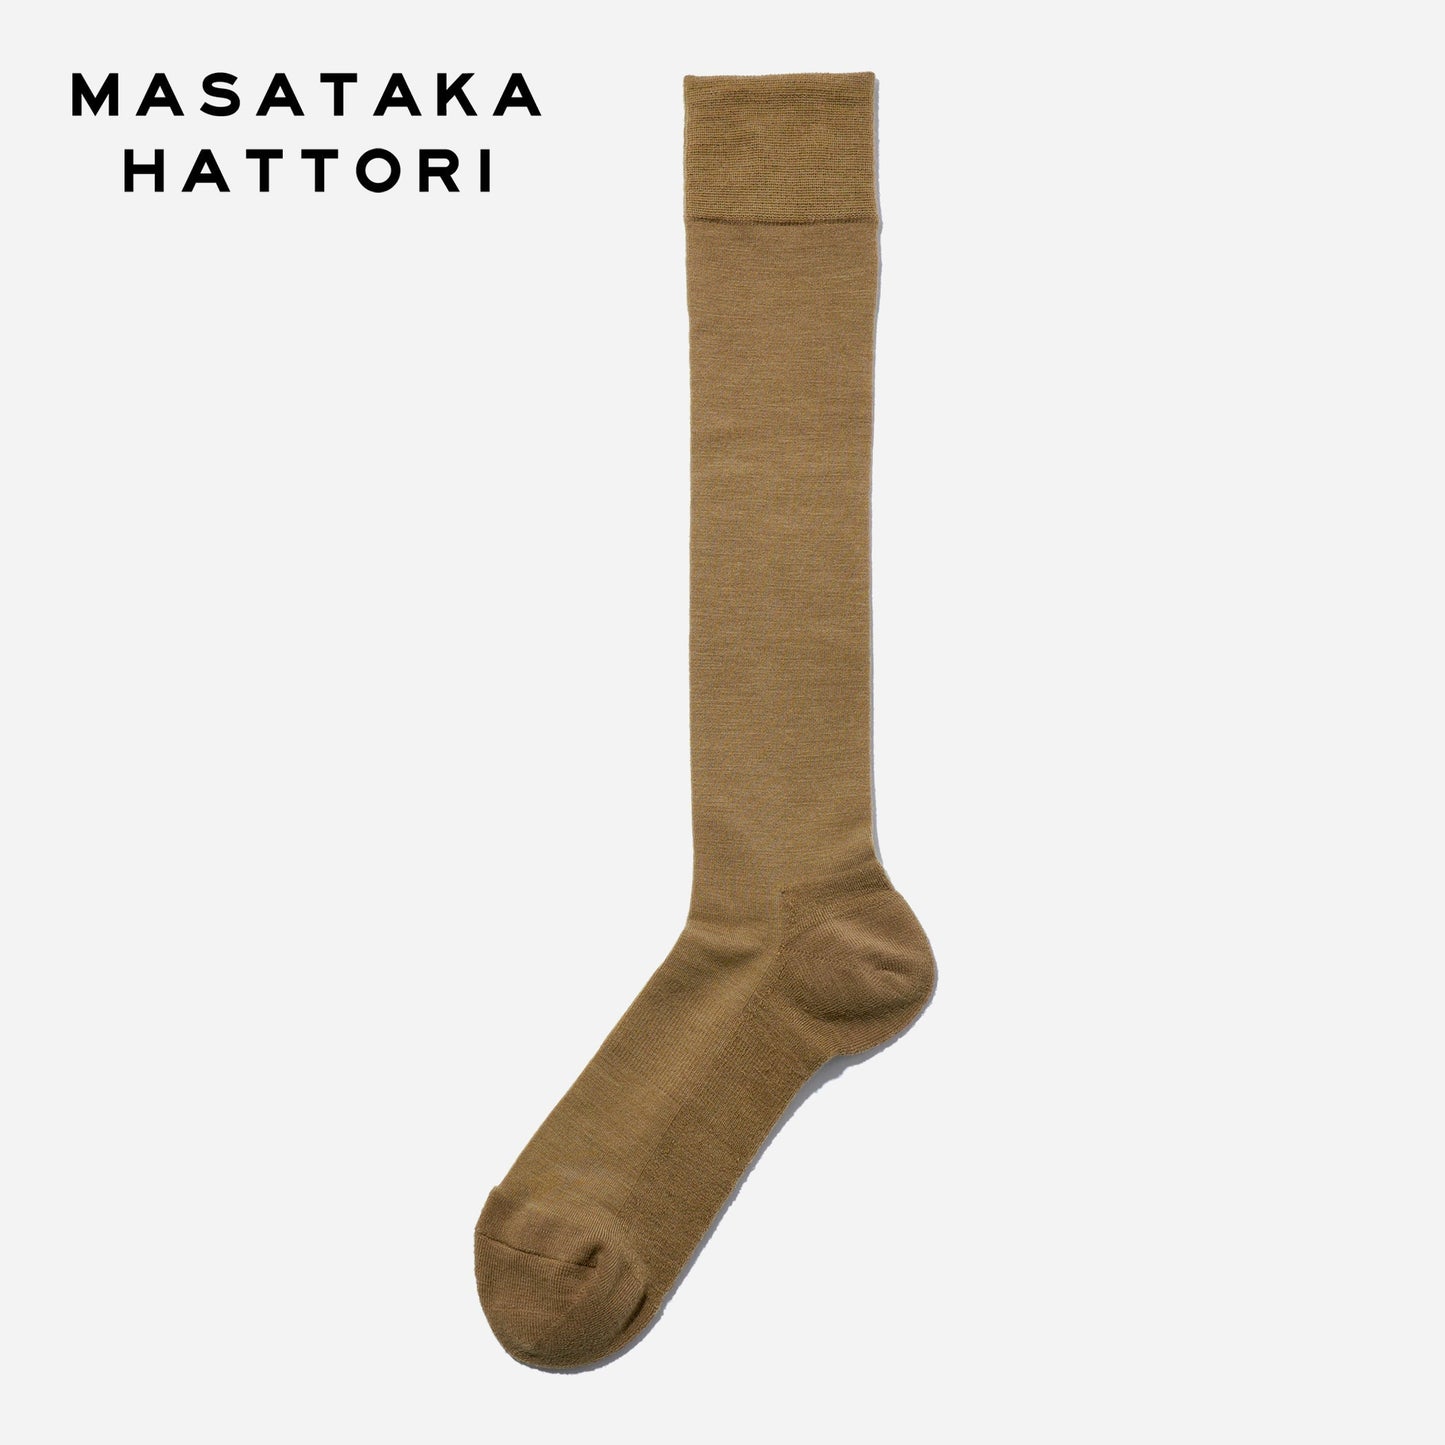 MASATAKA HATTORI  ×CHICSTOCKS  ロングホーズソックス  全３色